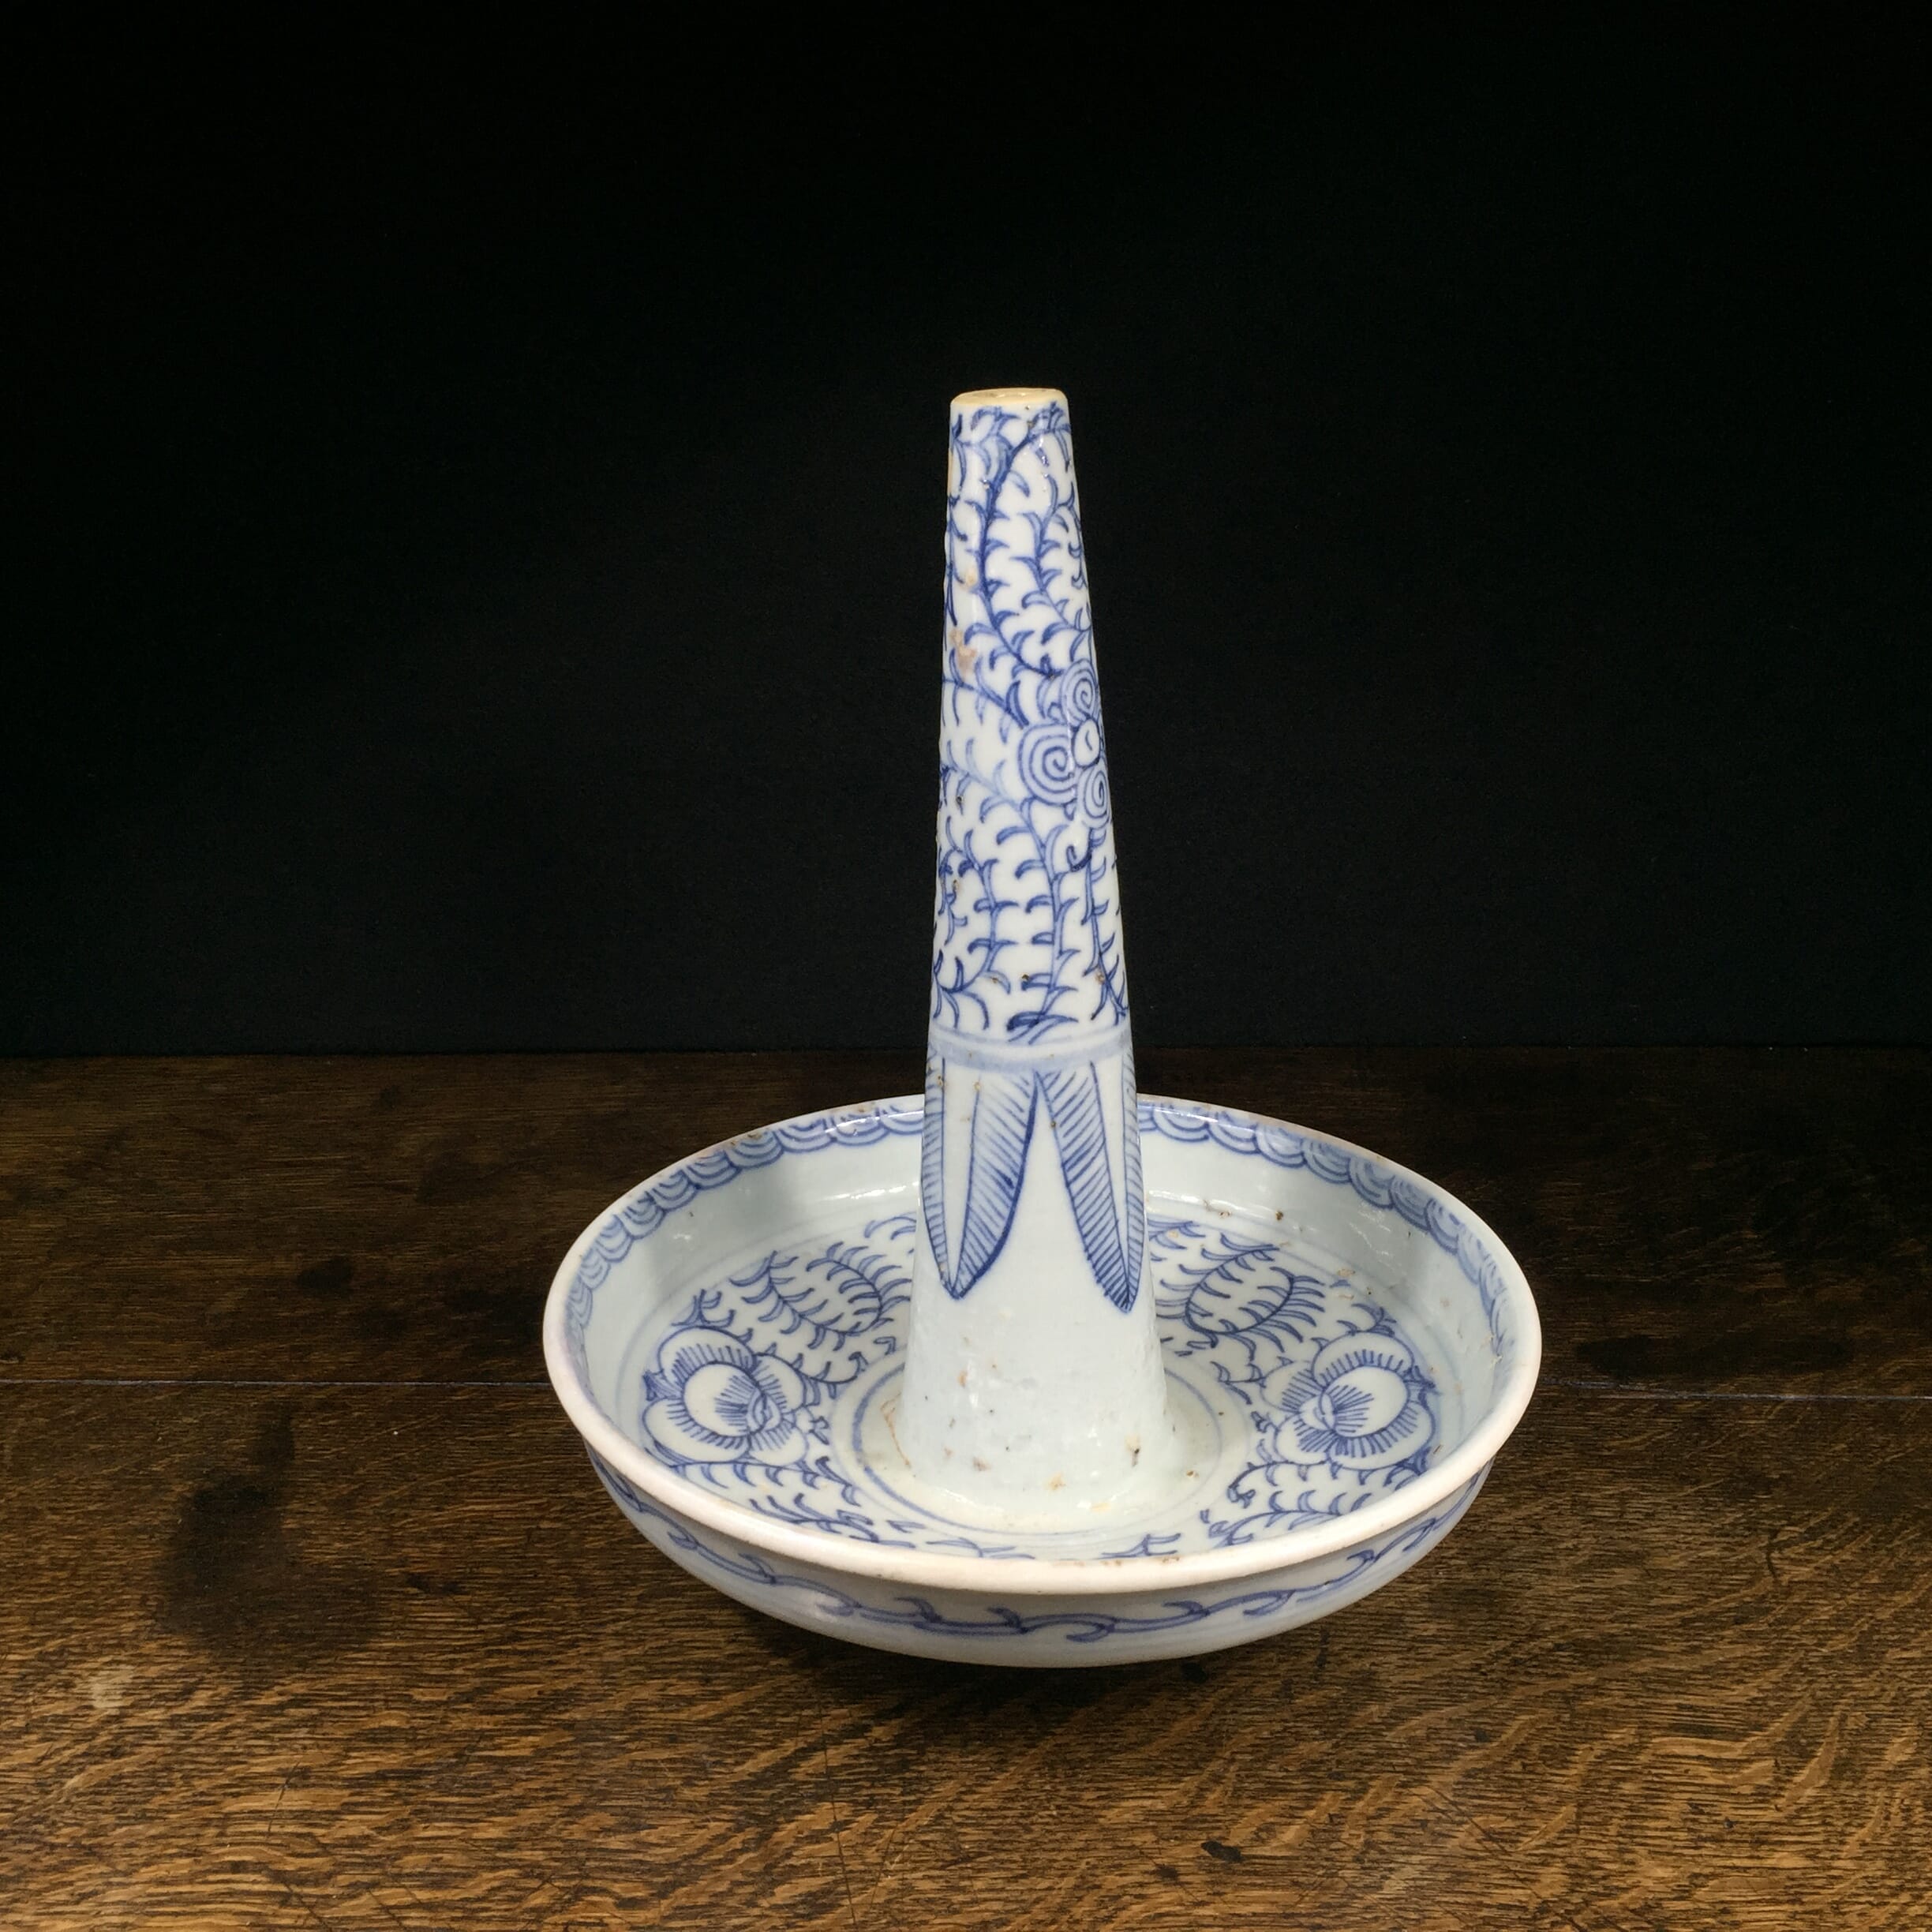 Chinese porcelain lamp, underglaze blue flower decoration, 18th/19th century -0